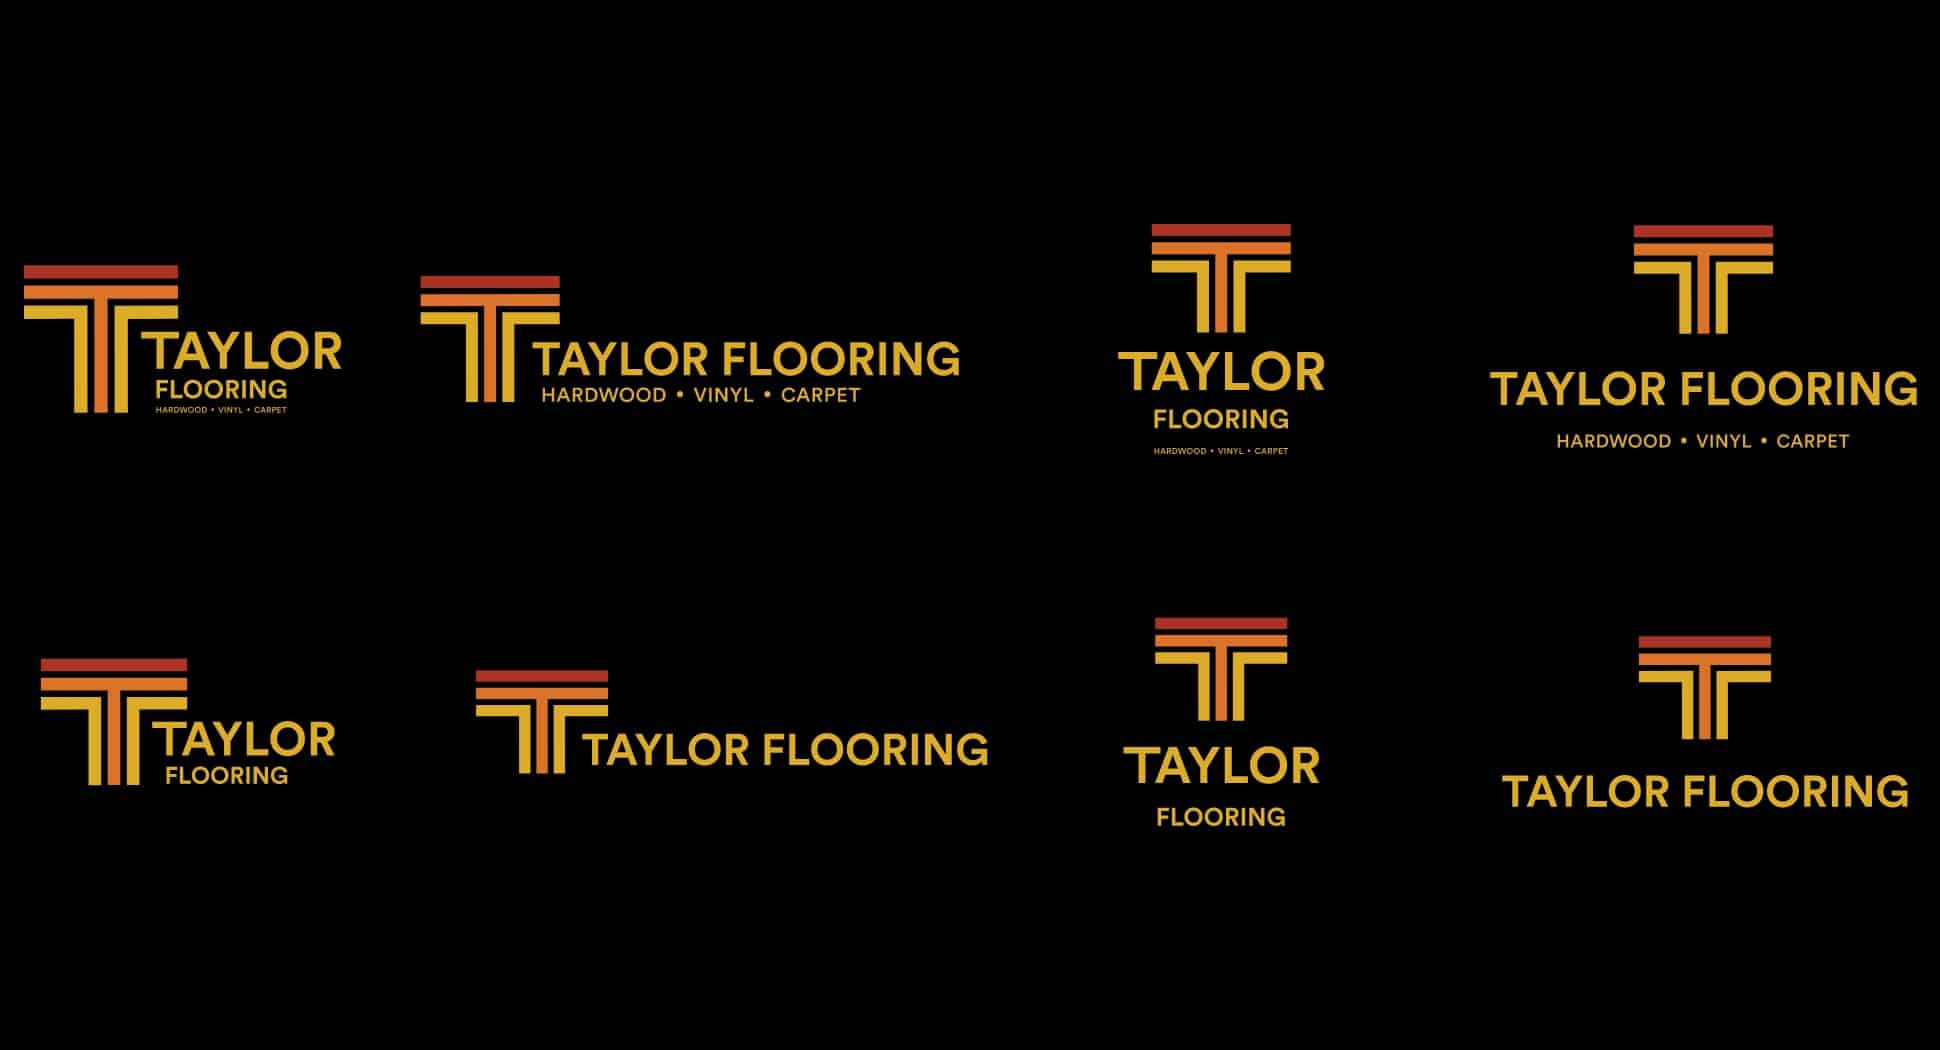 Logo marks of Taylor Flooring by Stellen Design